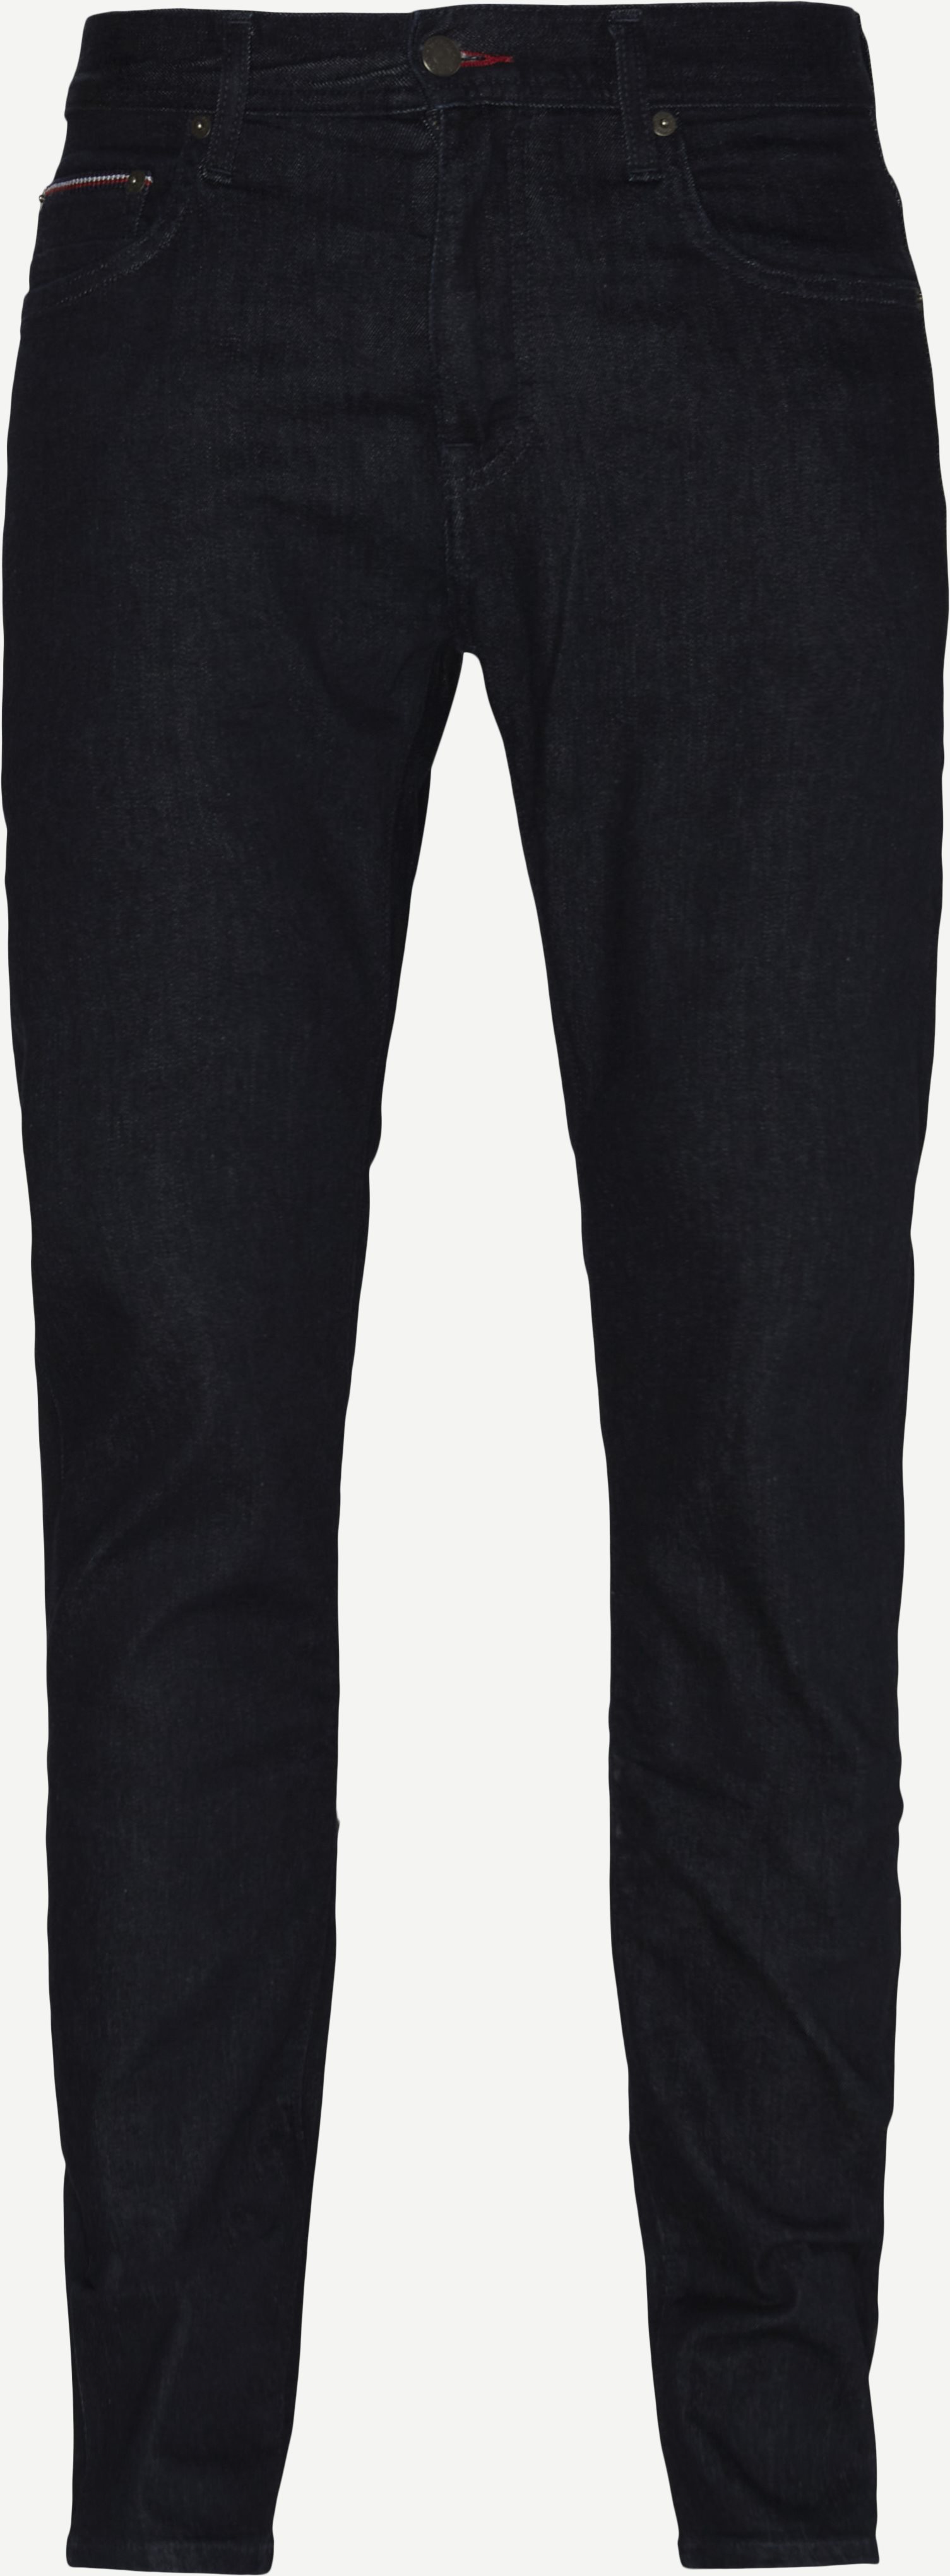 Bleecker Jeans - Jeans - Slim fit - Denim